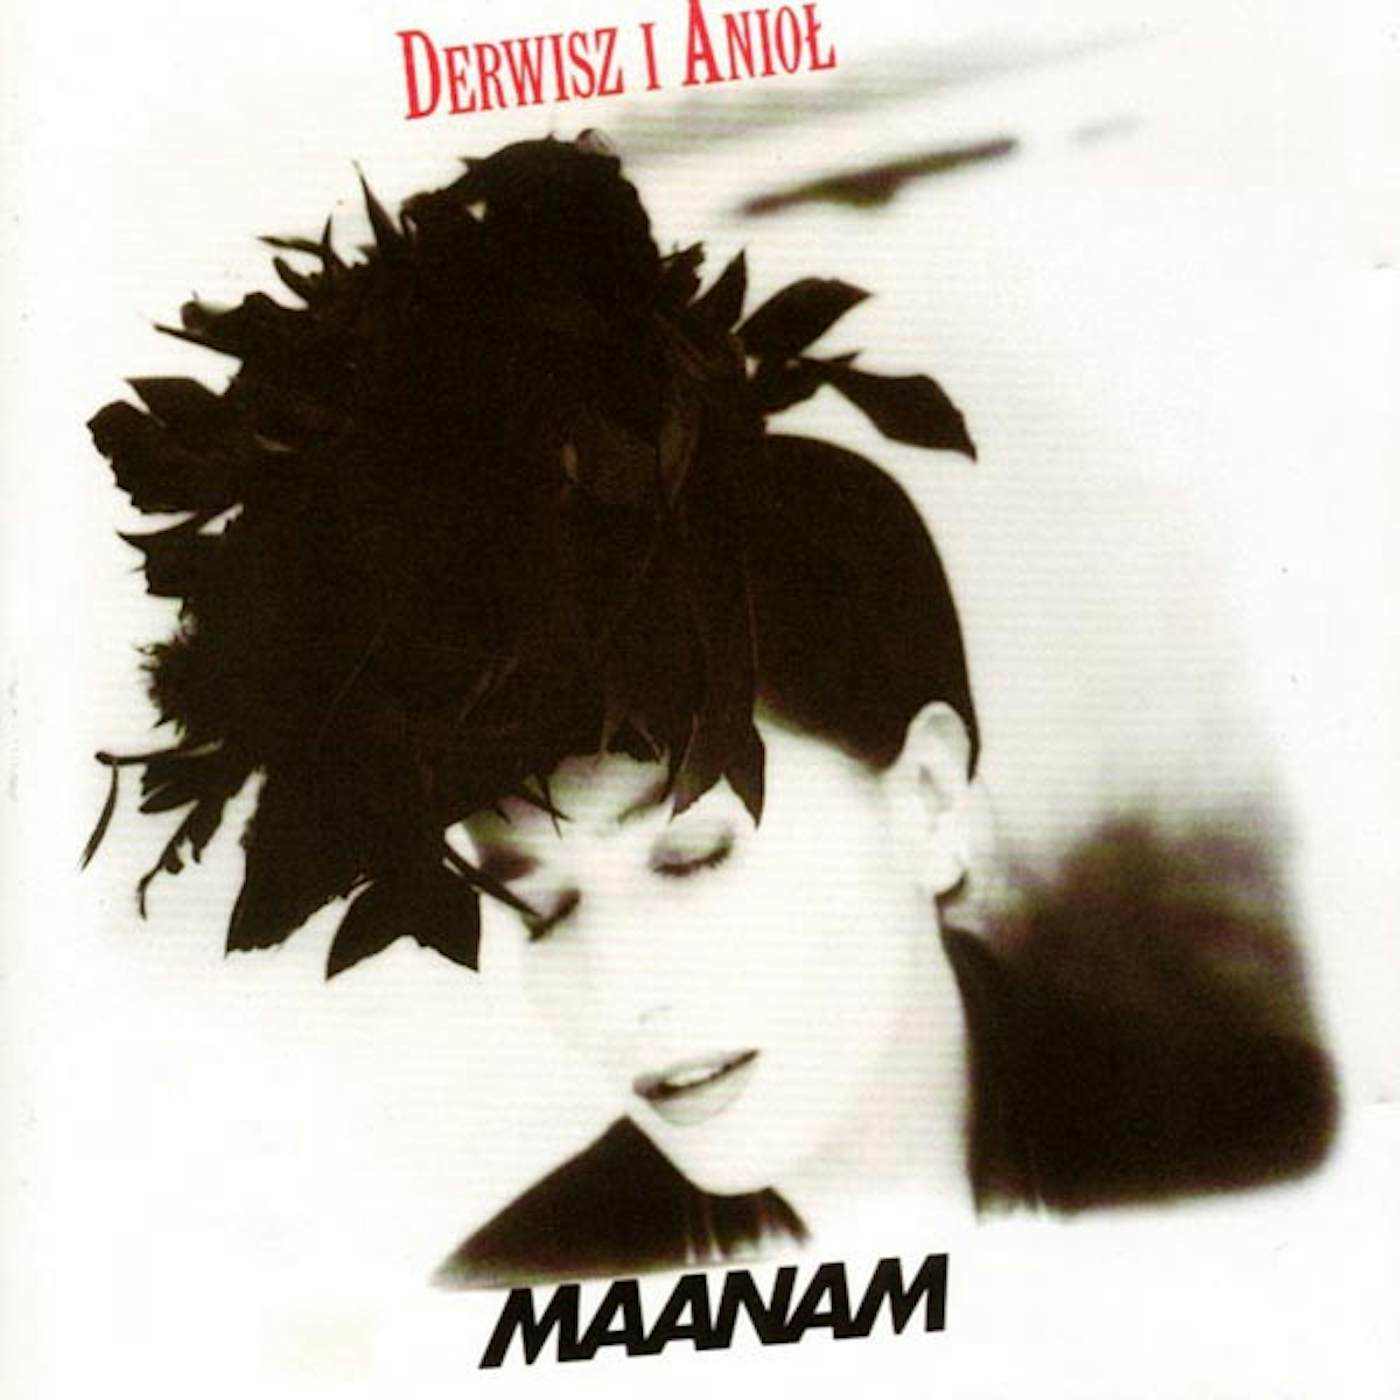 Maanam DERWISZ I ANIOL Vinyl Record